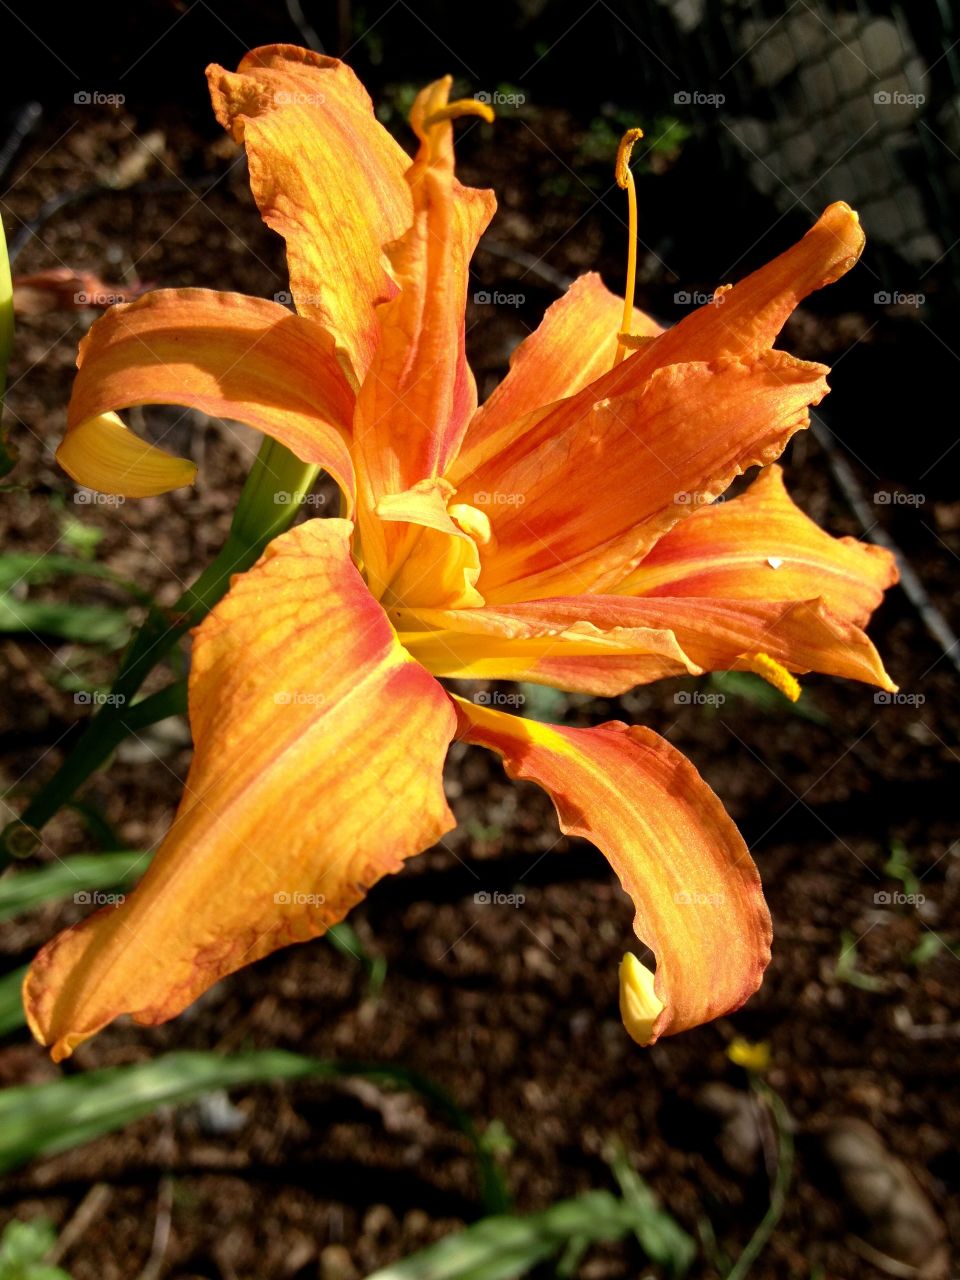 Orange Day Lily from my garden!